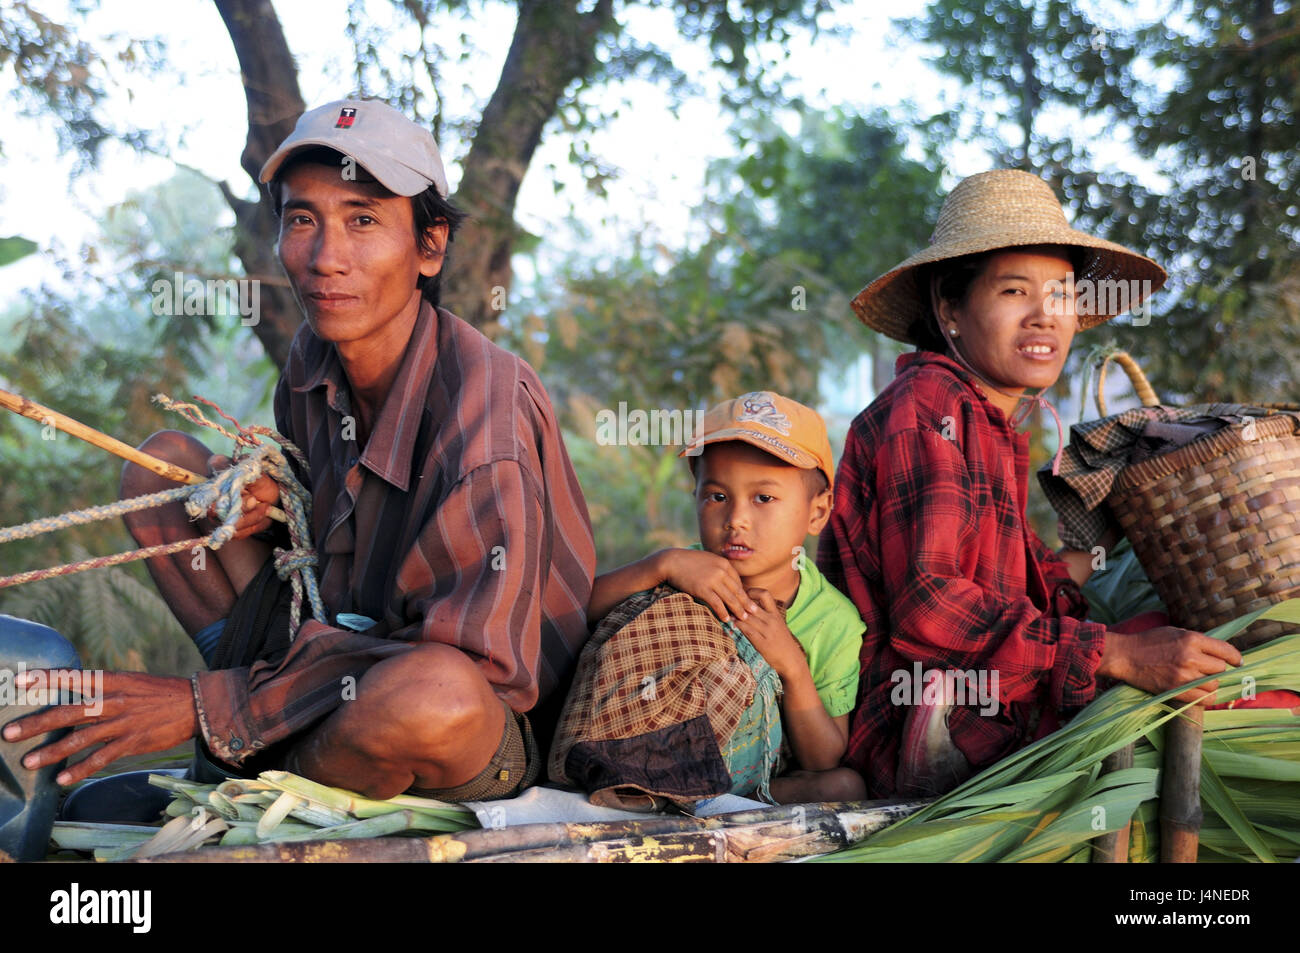 Family, ox's carts, Pyay, Myanmar Stock Photo - Alamy